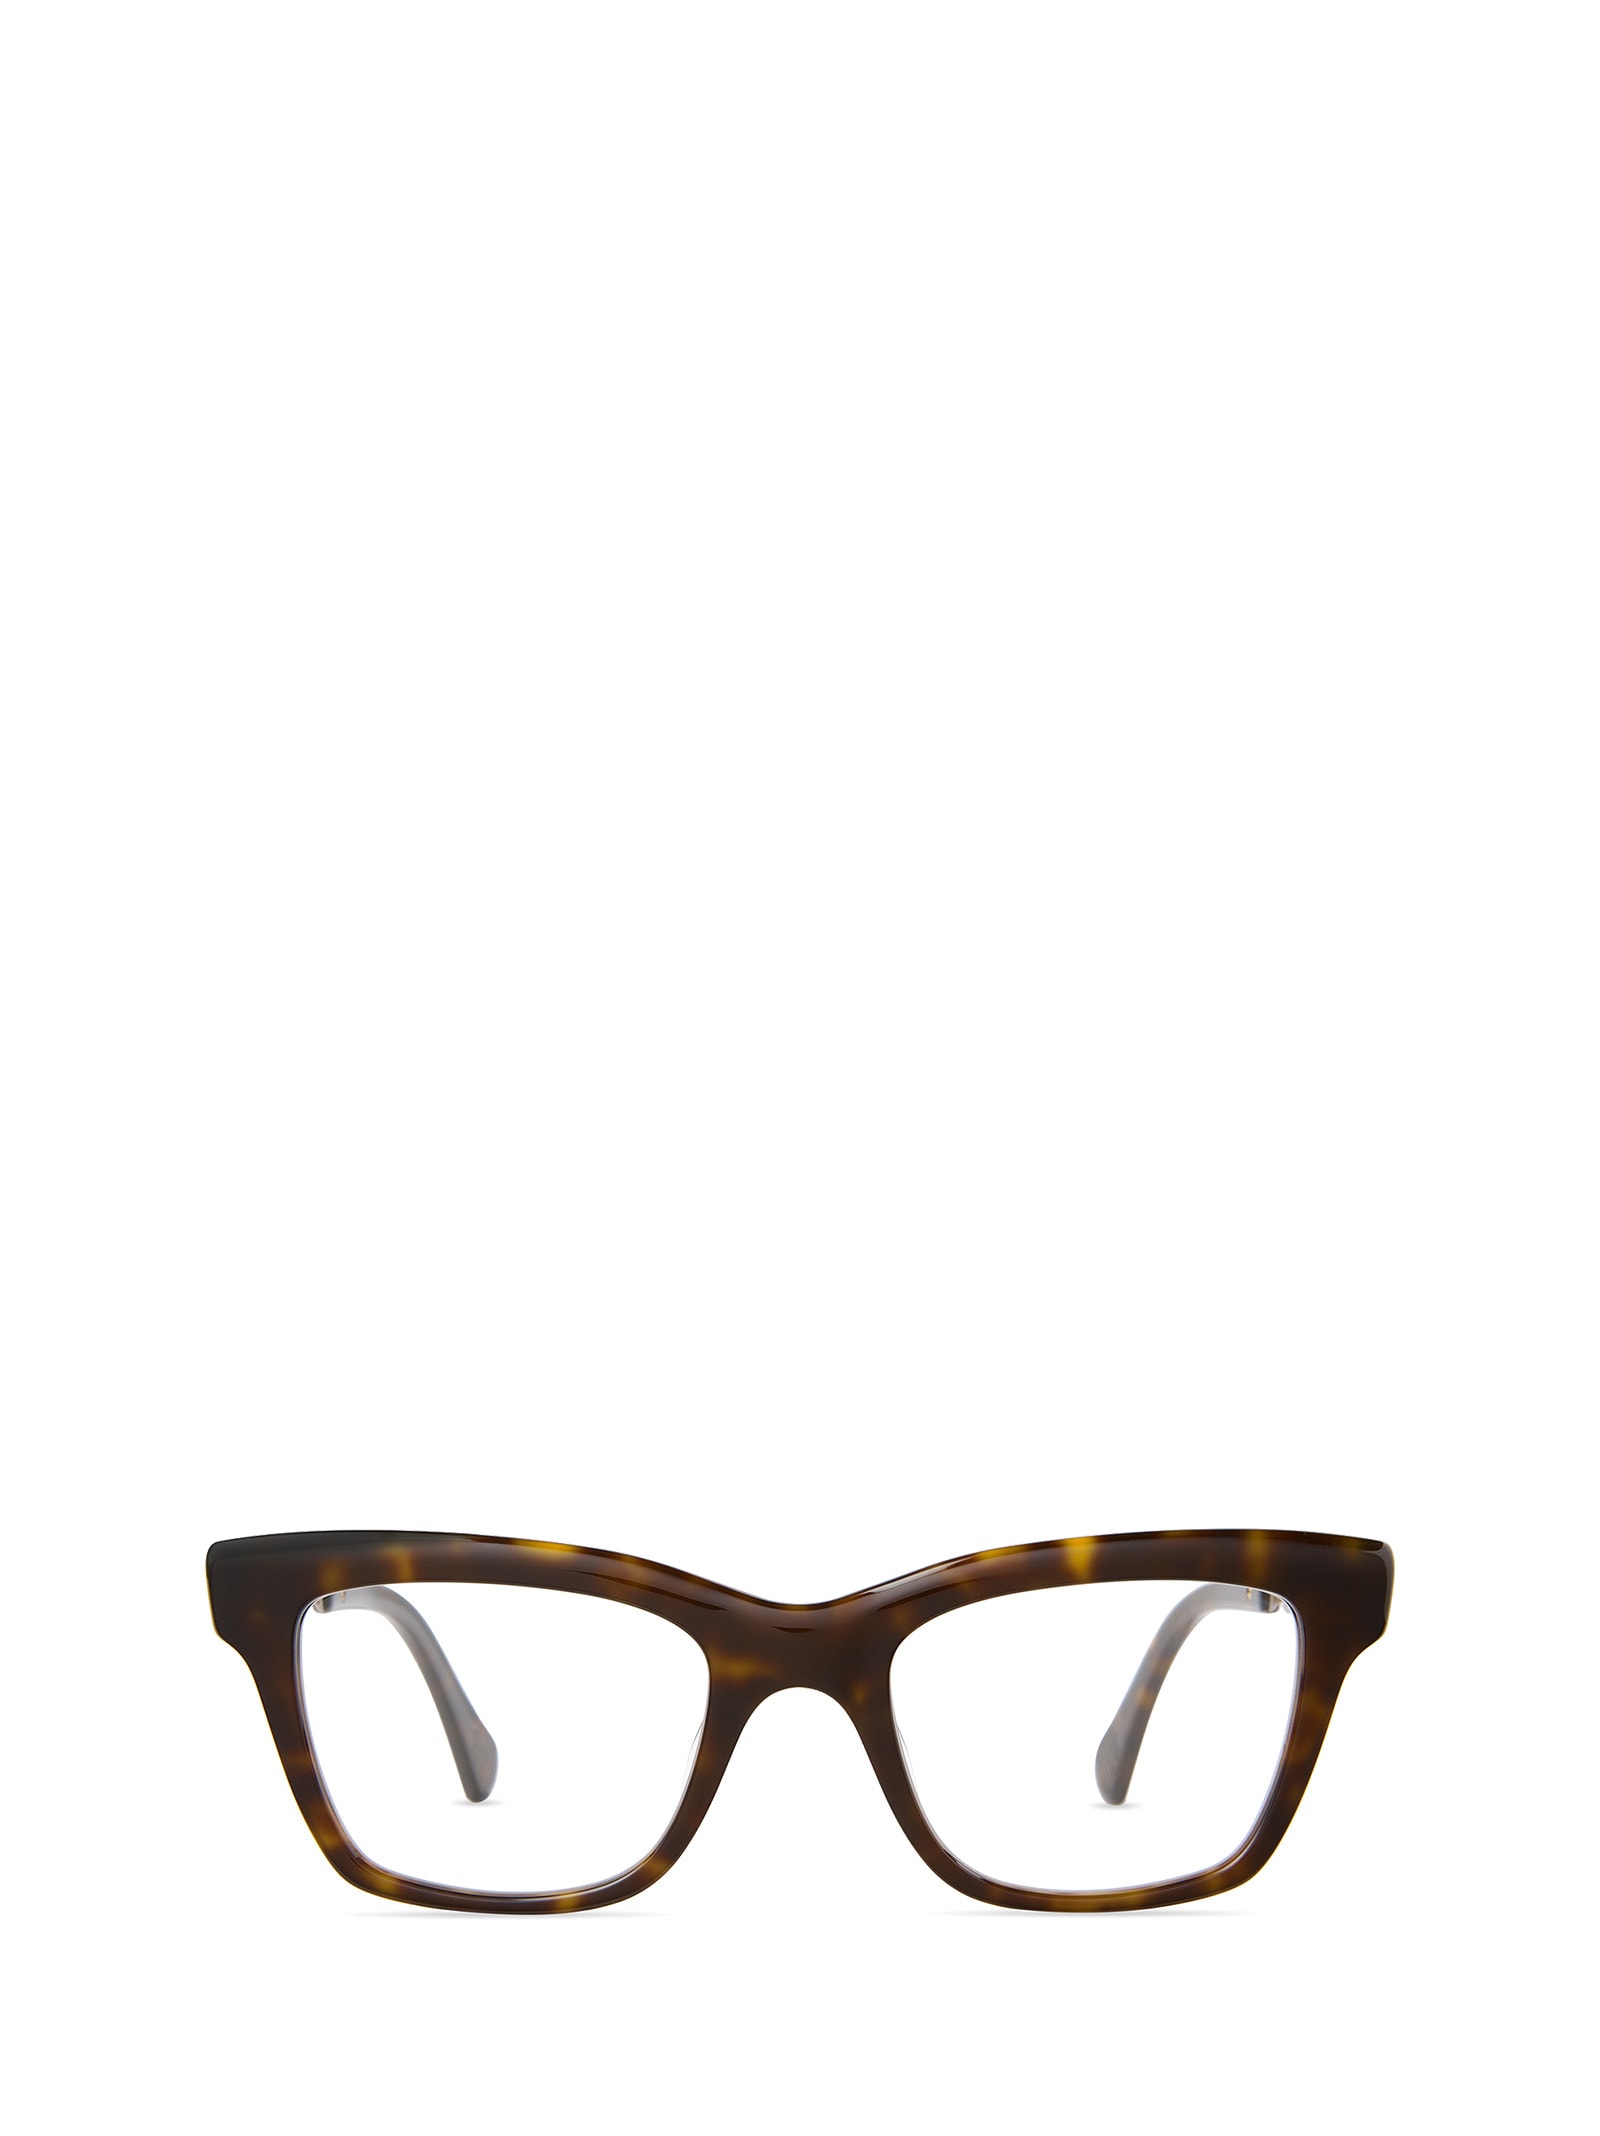 Mr Leight Lolita C Hickory Tortoise-chocolate Gold Glasses